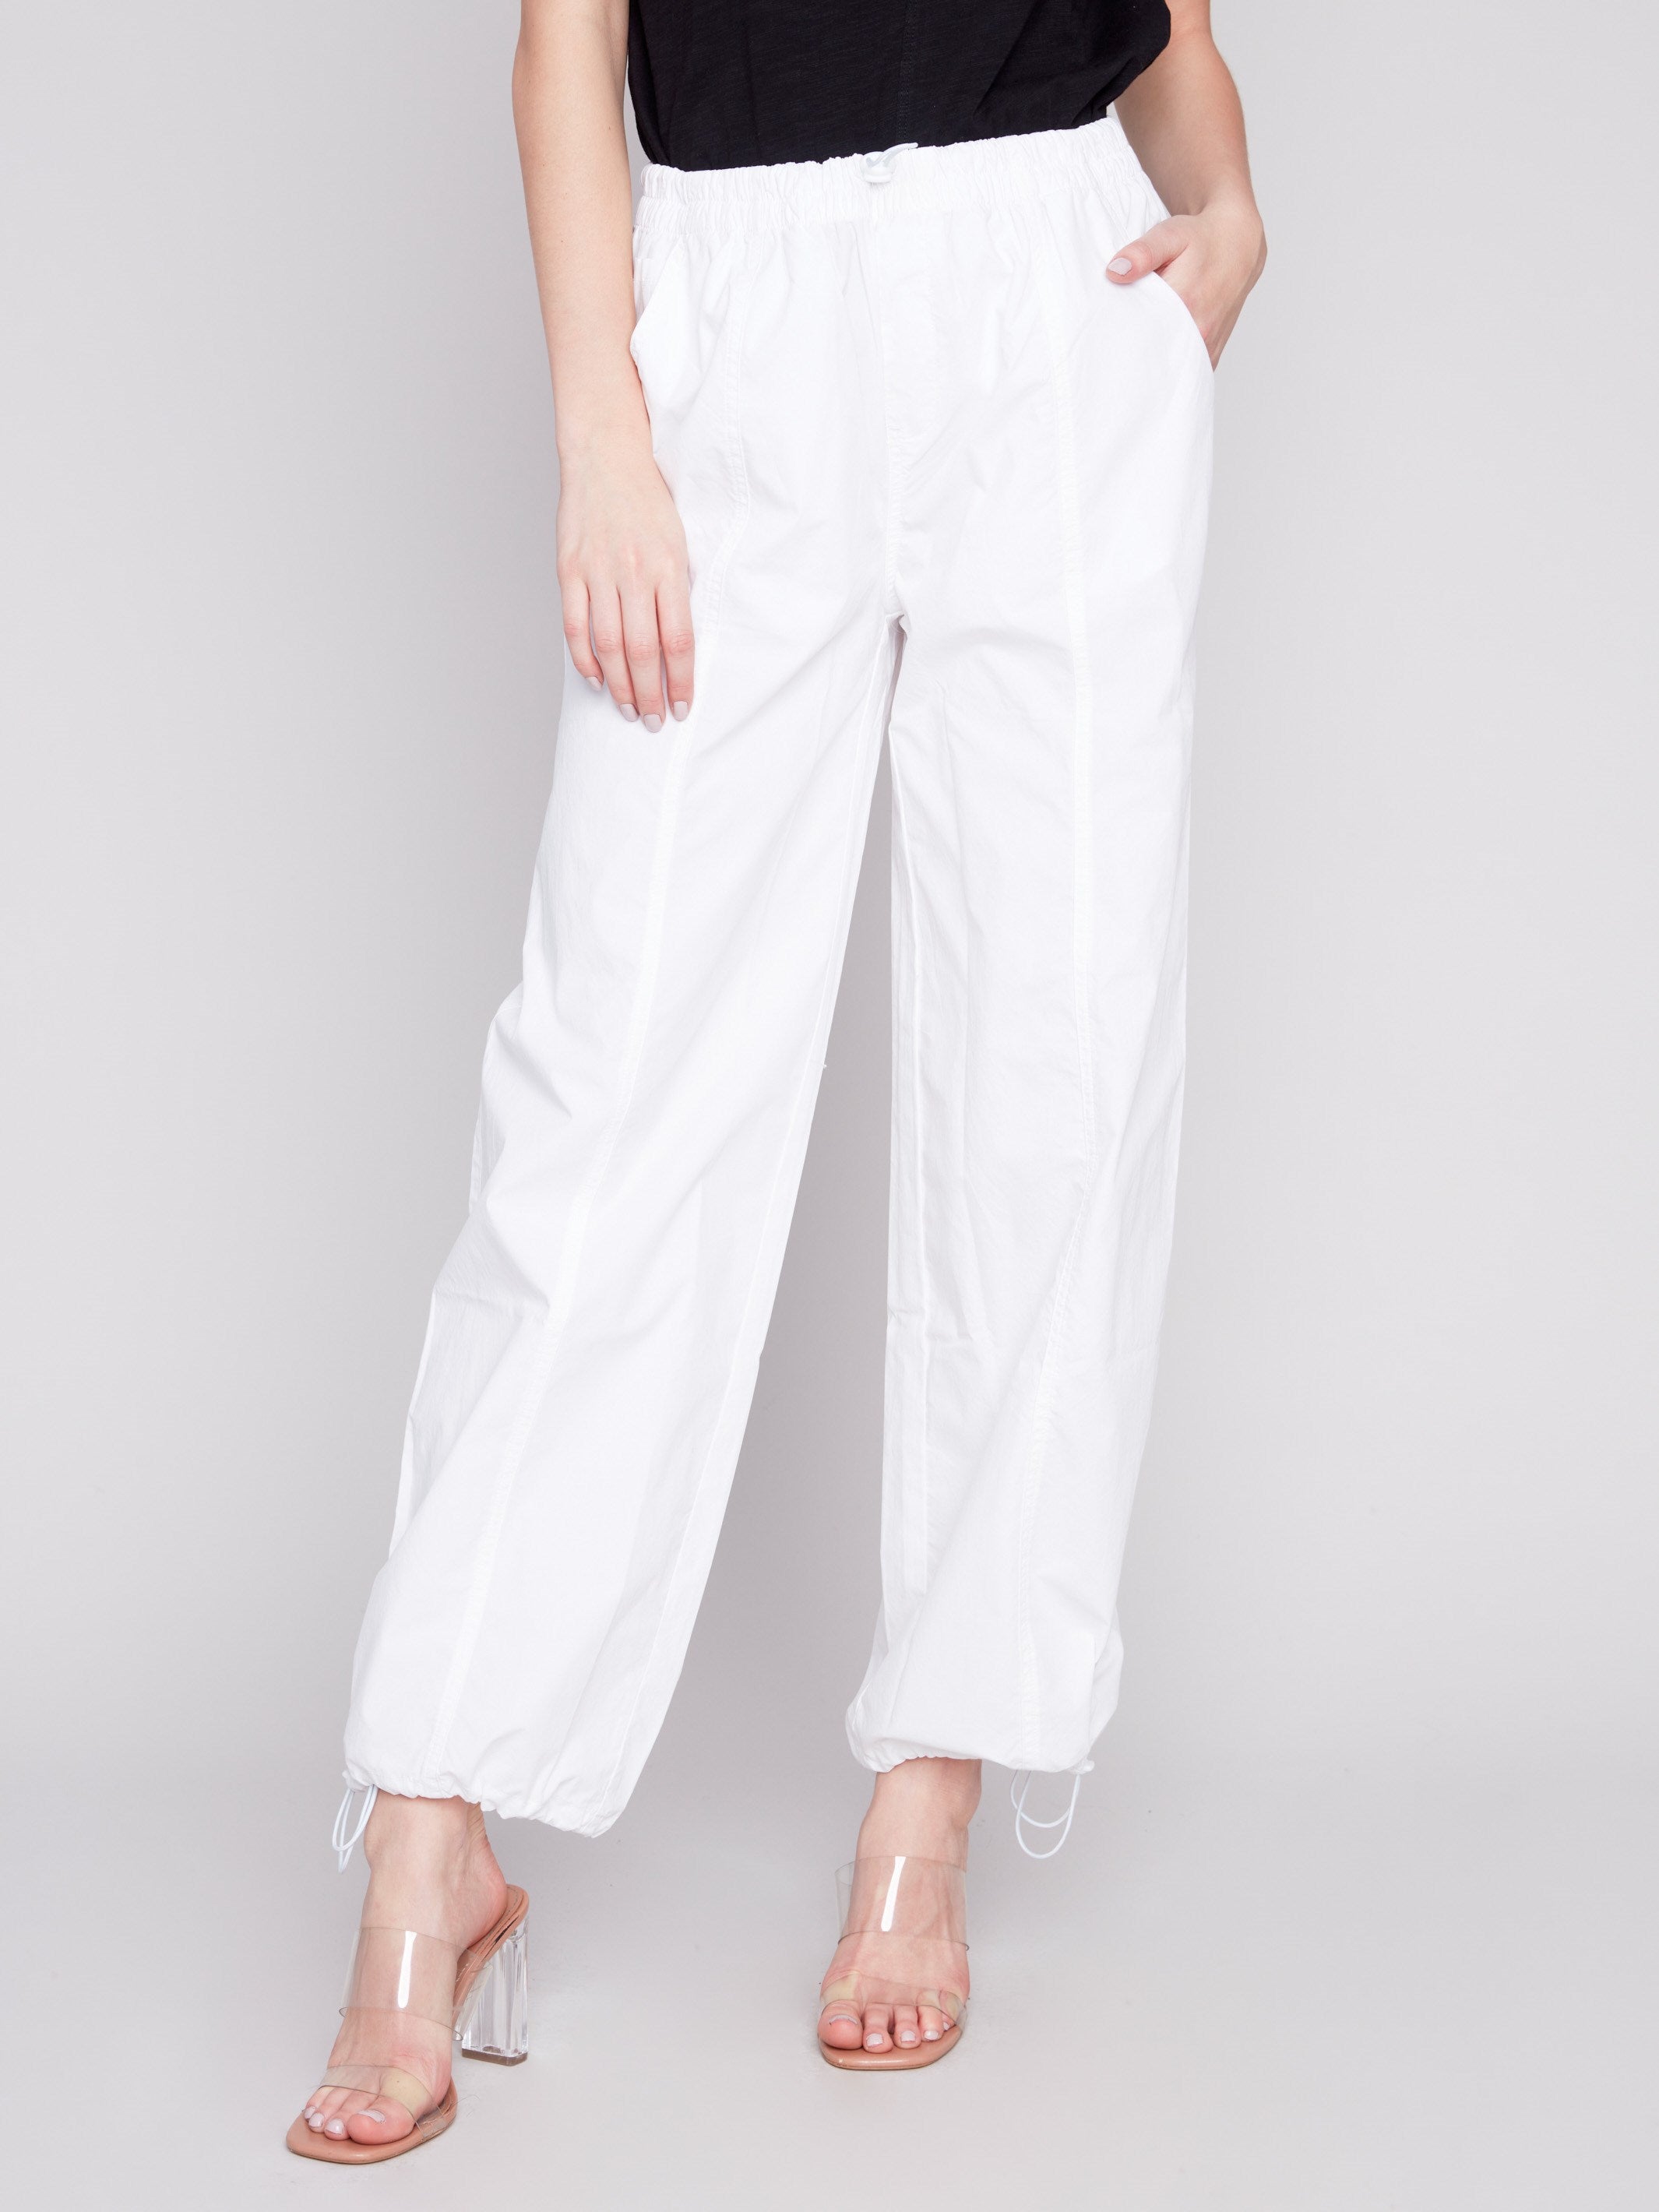 Cotton Parachute Pants - White - Charlie B Collection Canada - Image 2